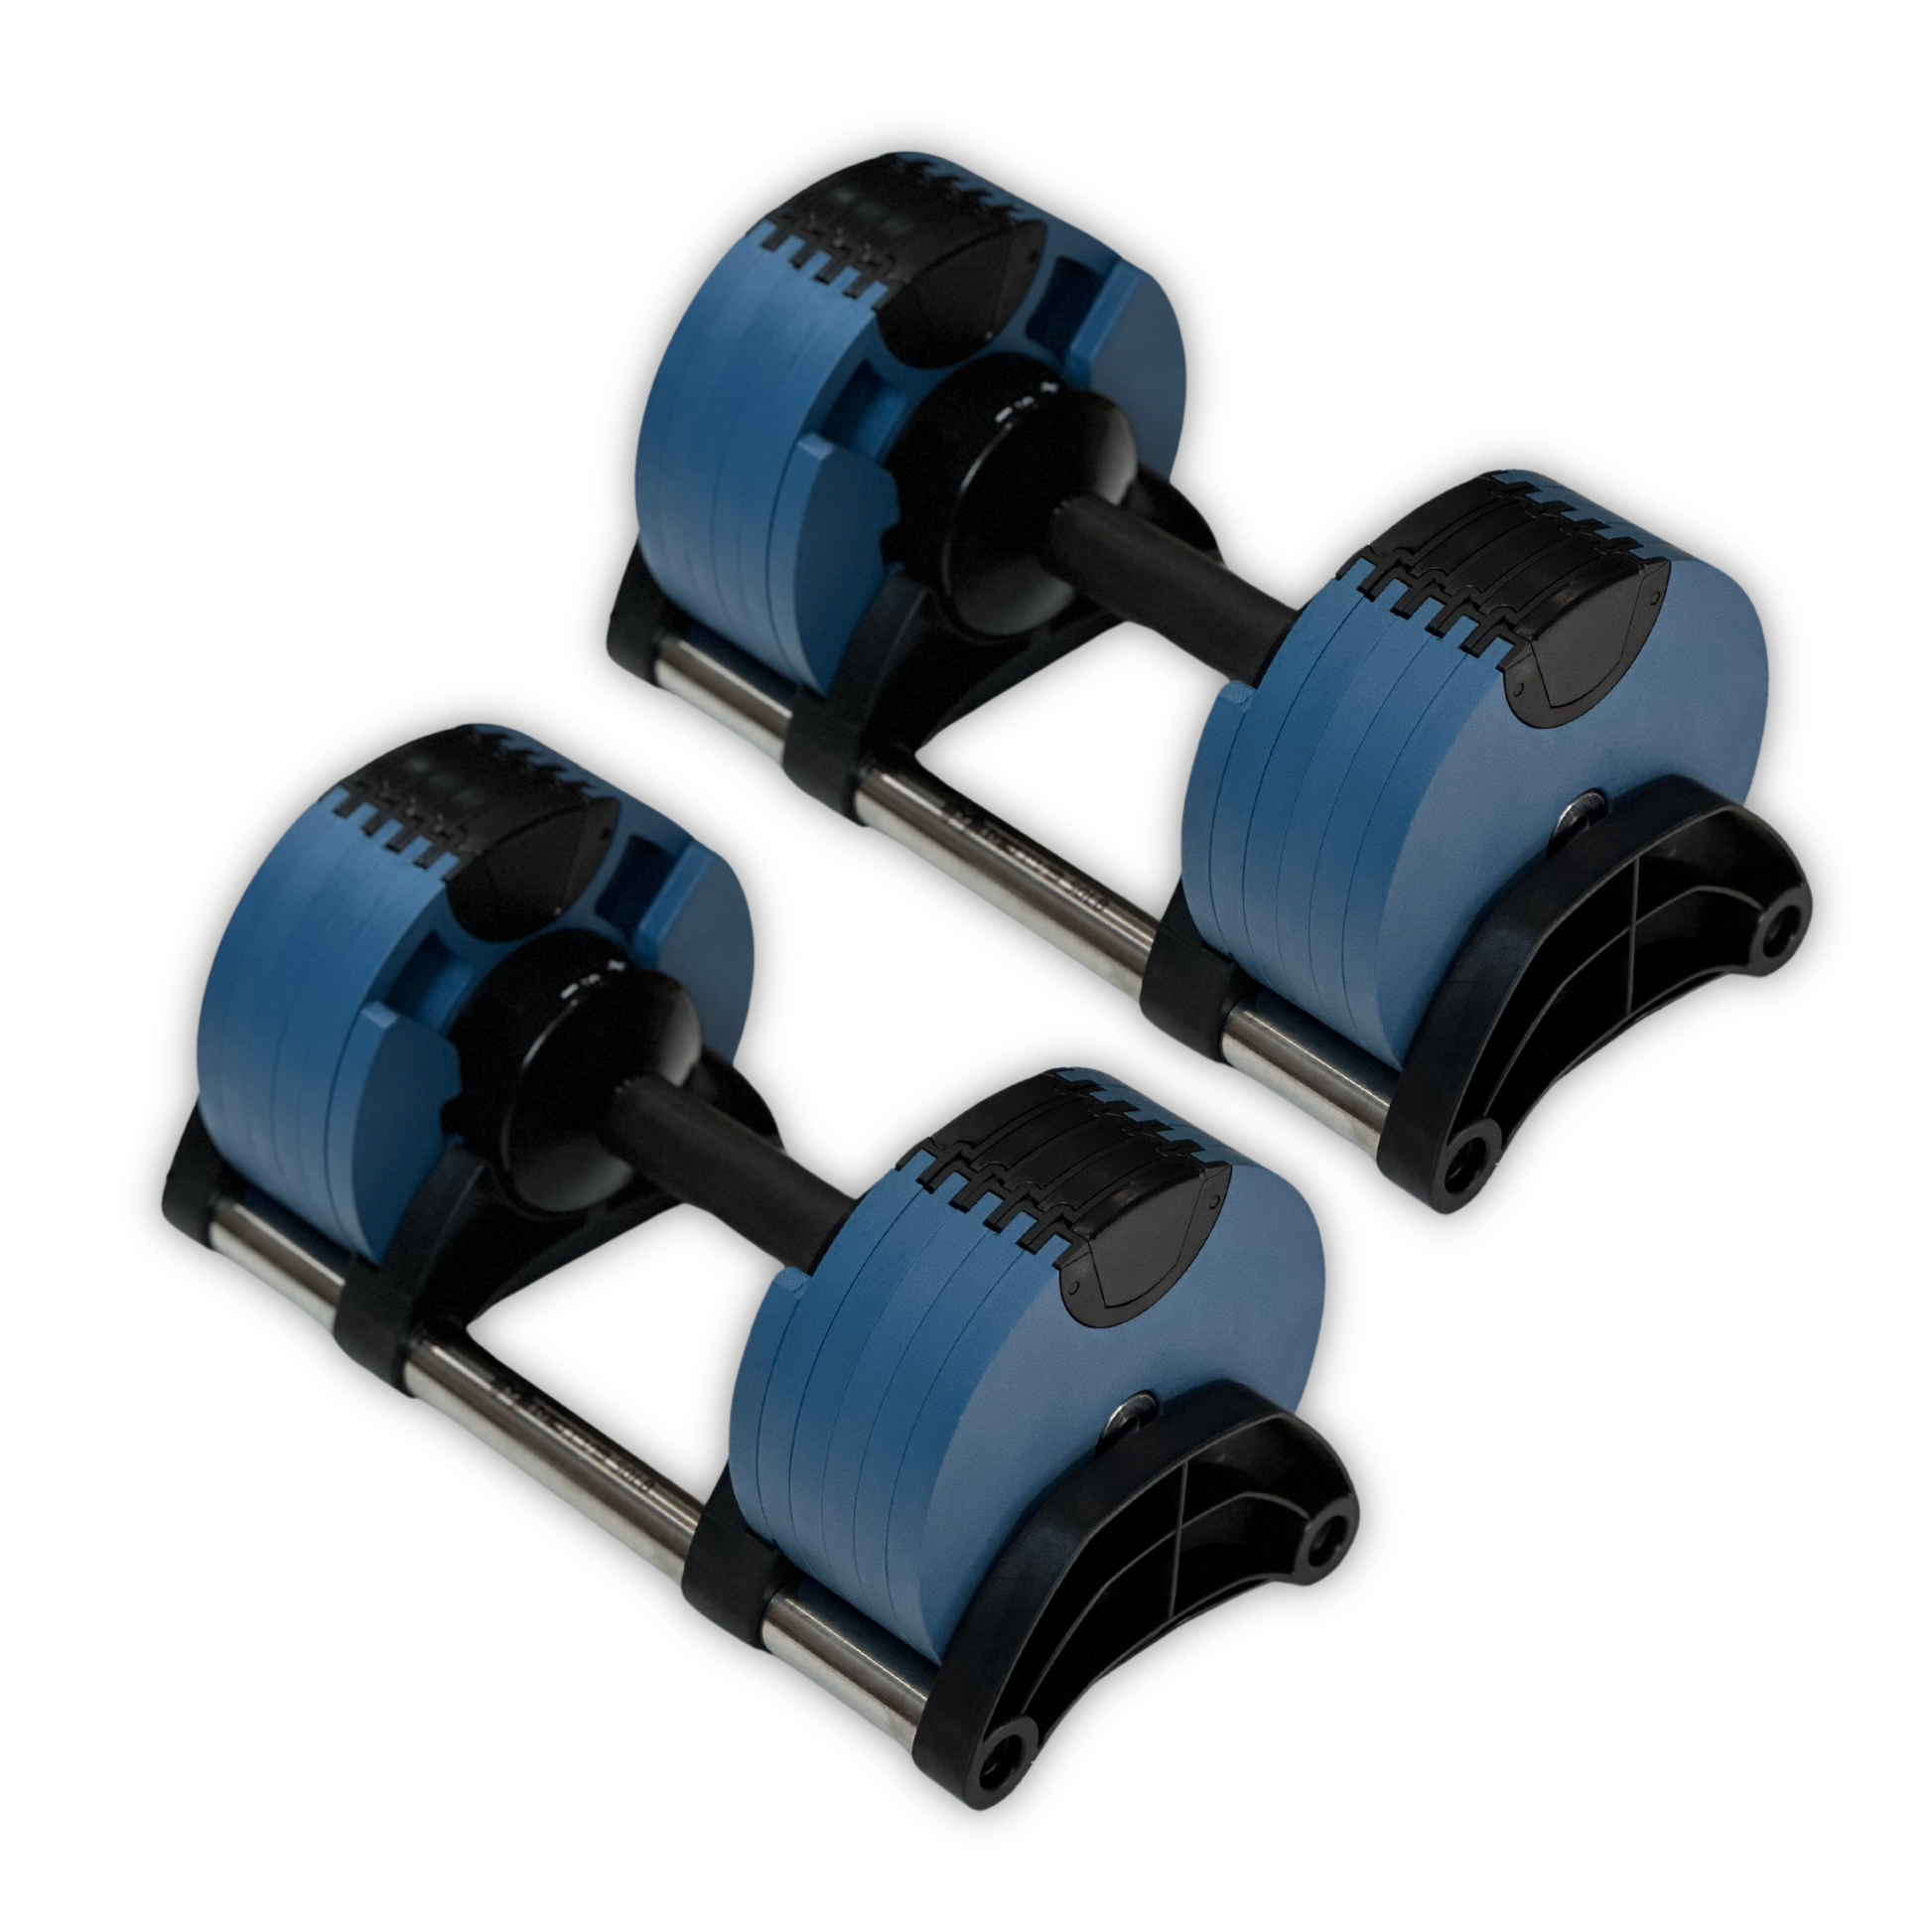 Motv8 Blue / No Probell 5-50 Adjustable Dumbbells